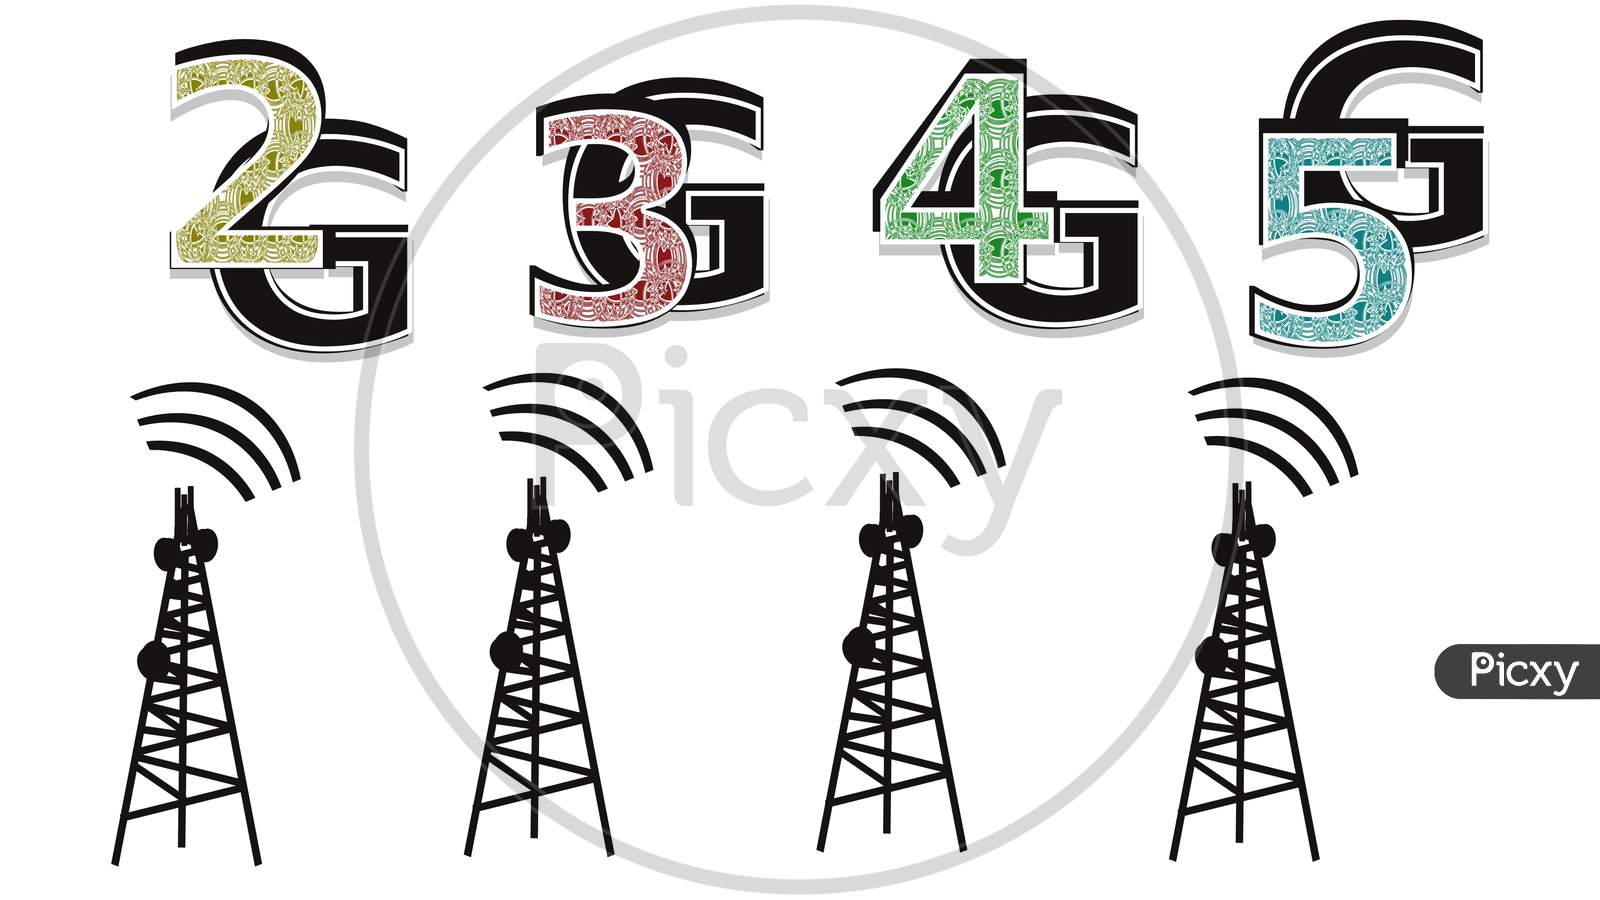 Vector Illustration, Internet Network Icons. 2G, 3G, 4G, 5G Mobile Networks Clip Art, Isolated On White Background.